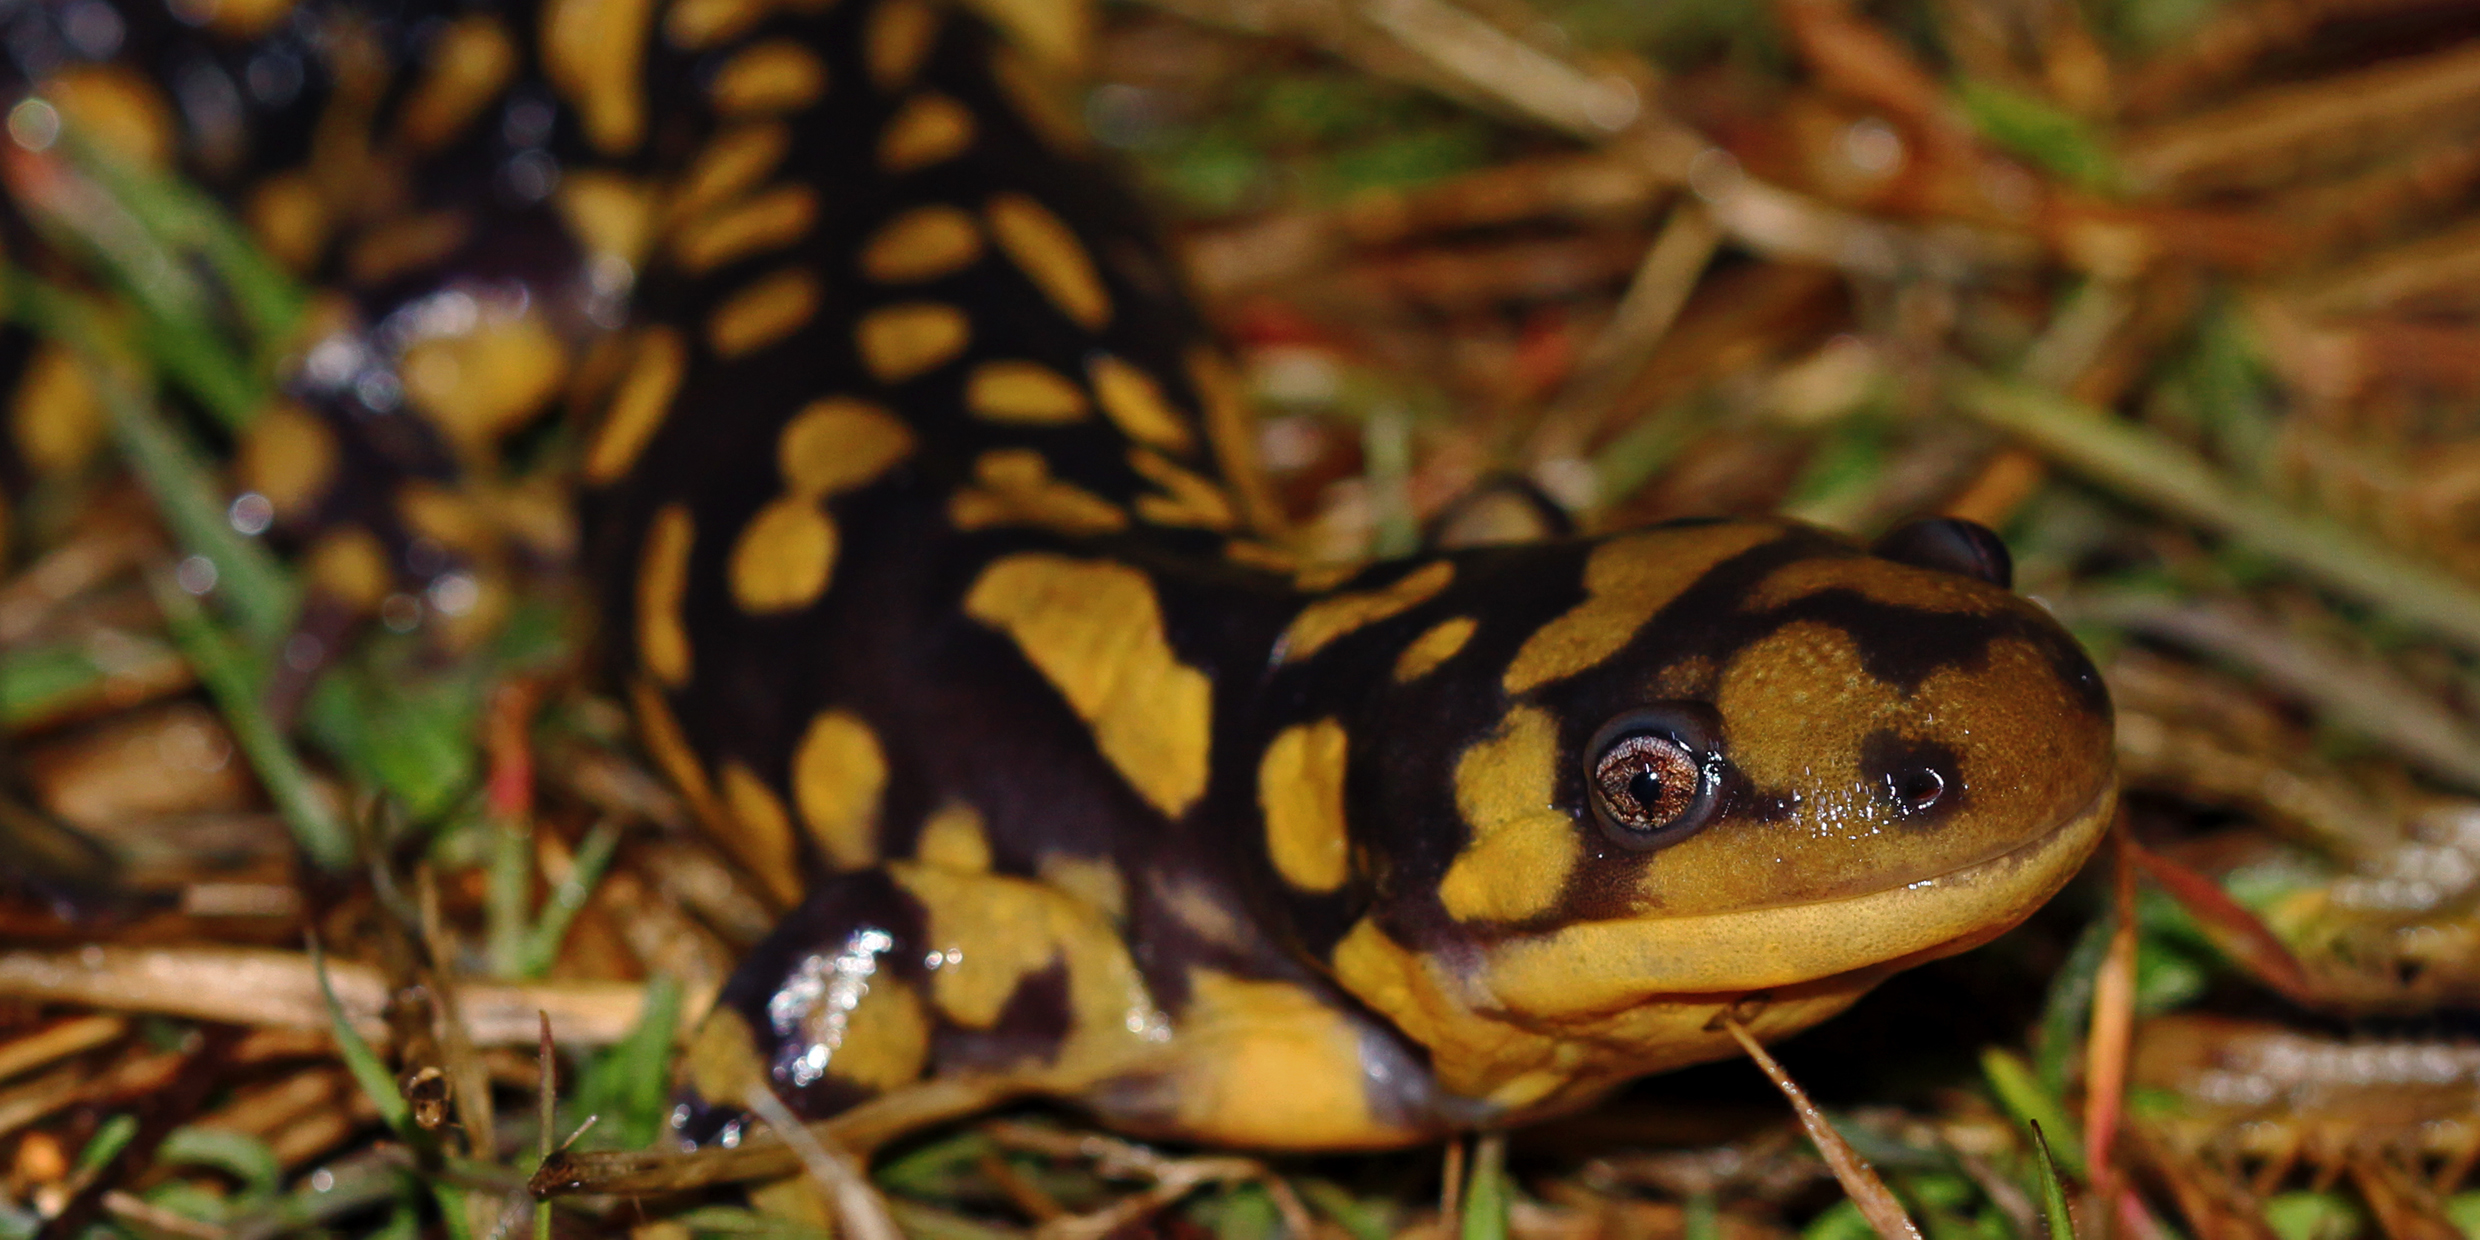 Image of yellow and black salamander